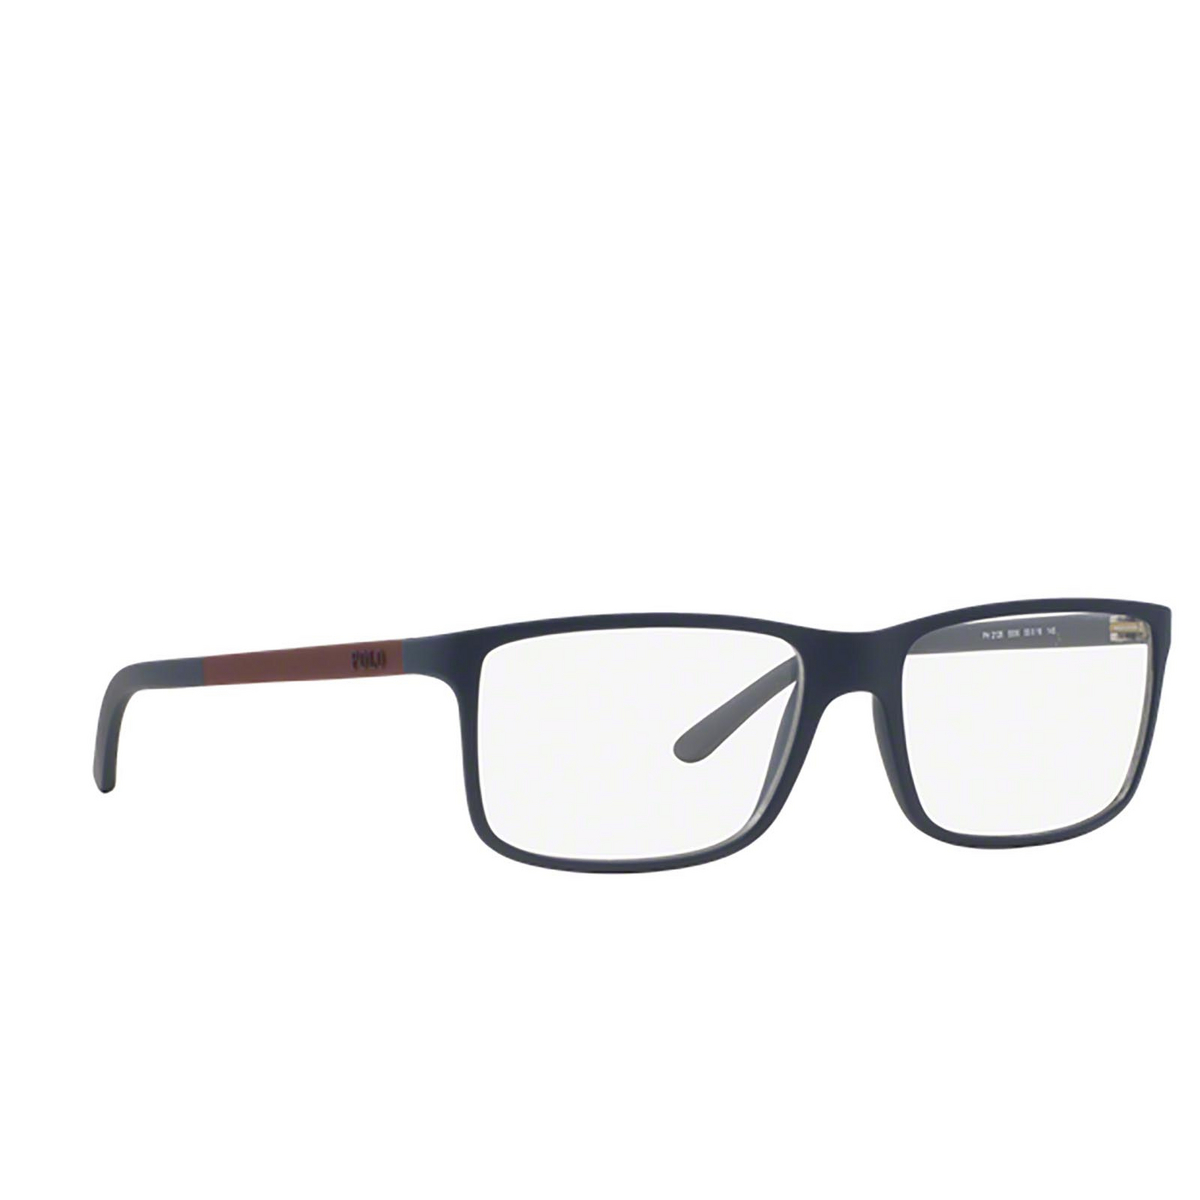 Polo Ralph Lauren® Rectangle Eyeglasses: PH2126 color Matte Navy Blue 5506 - three-quarters view.